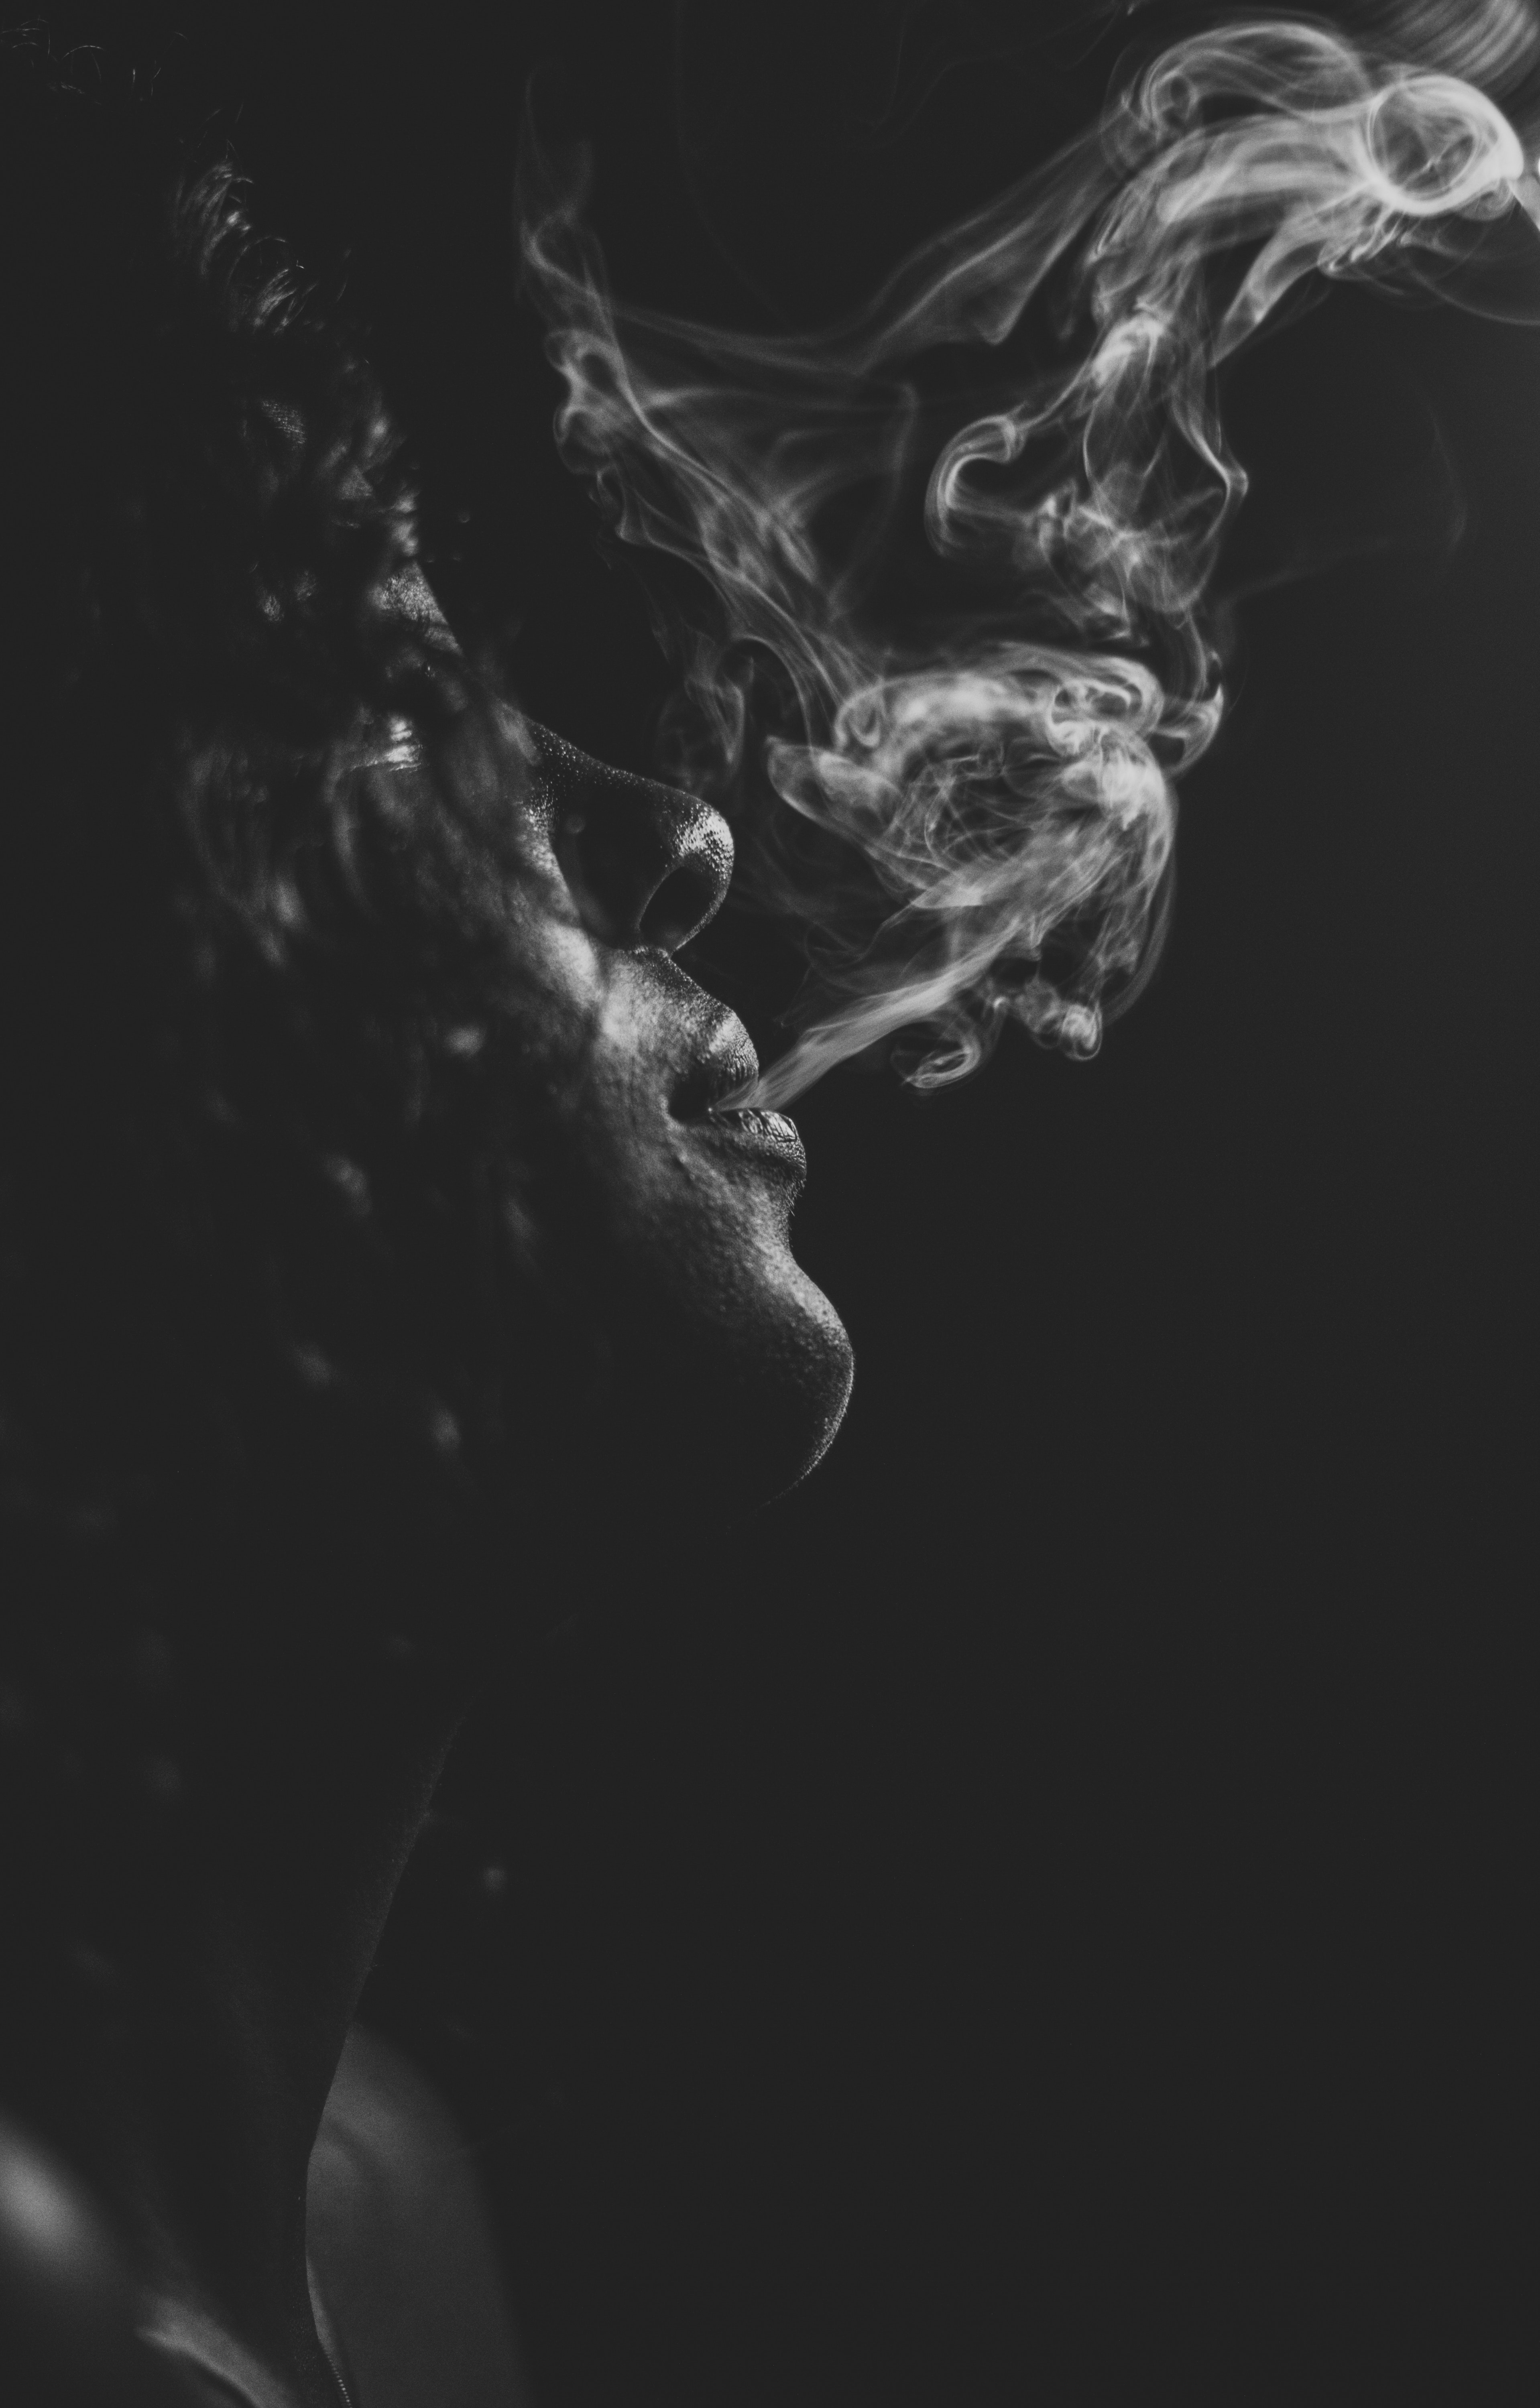 A woman smoking in the dark - Smoke